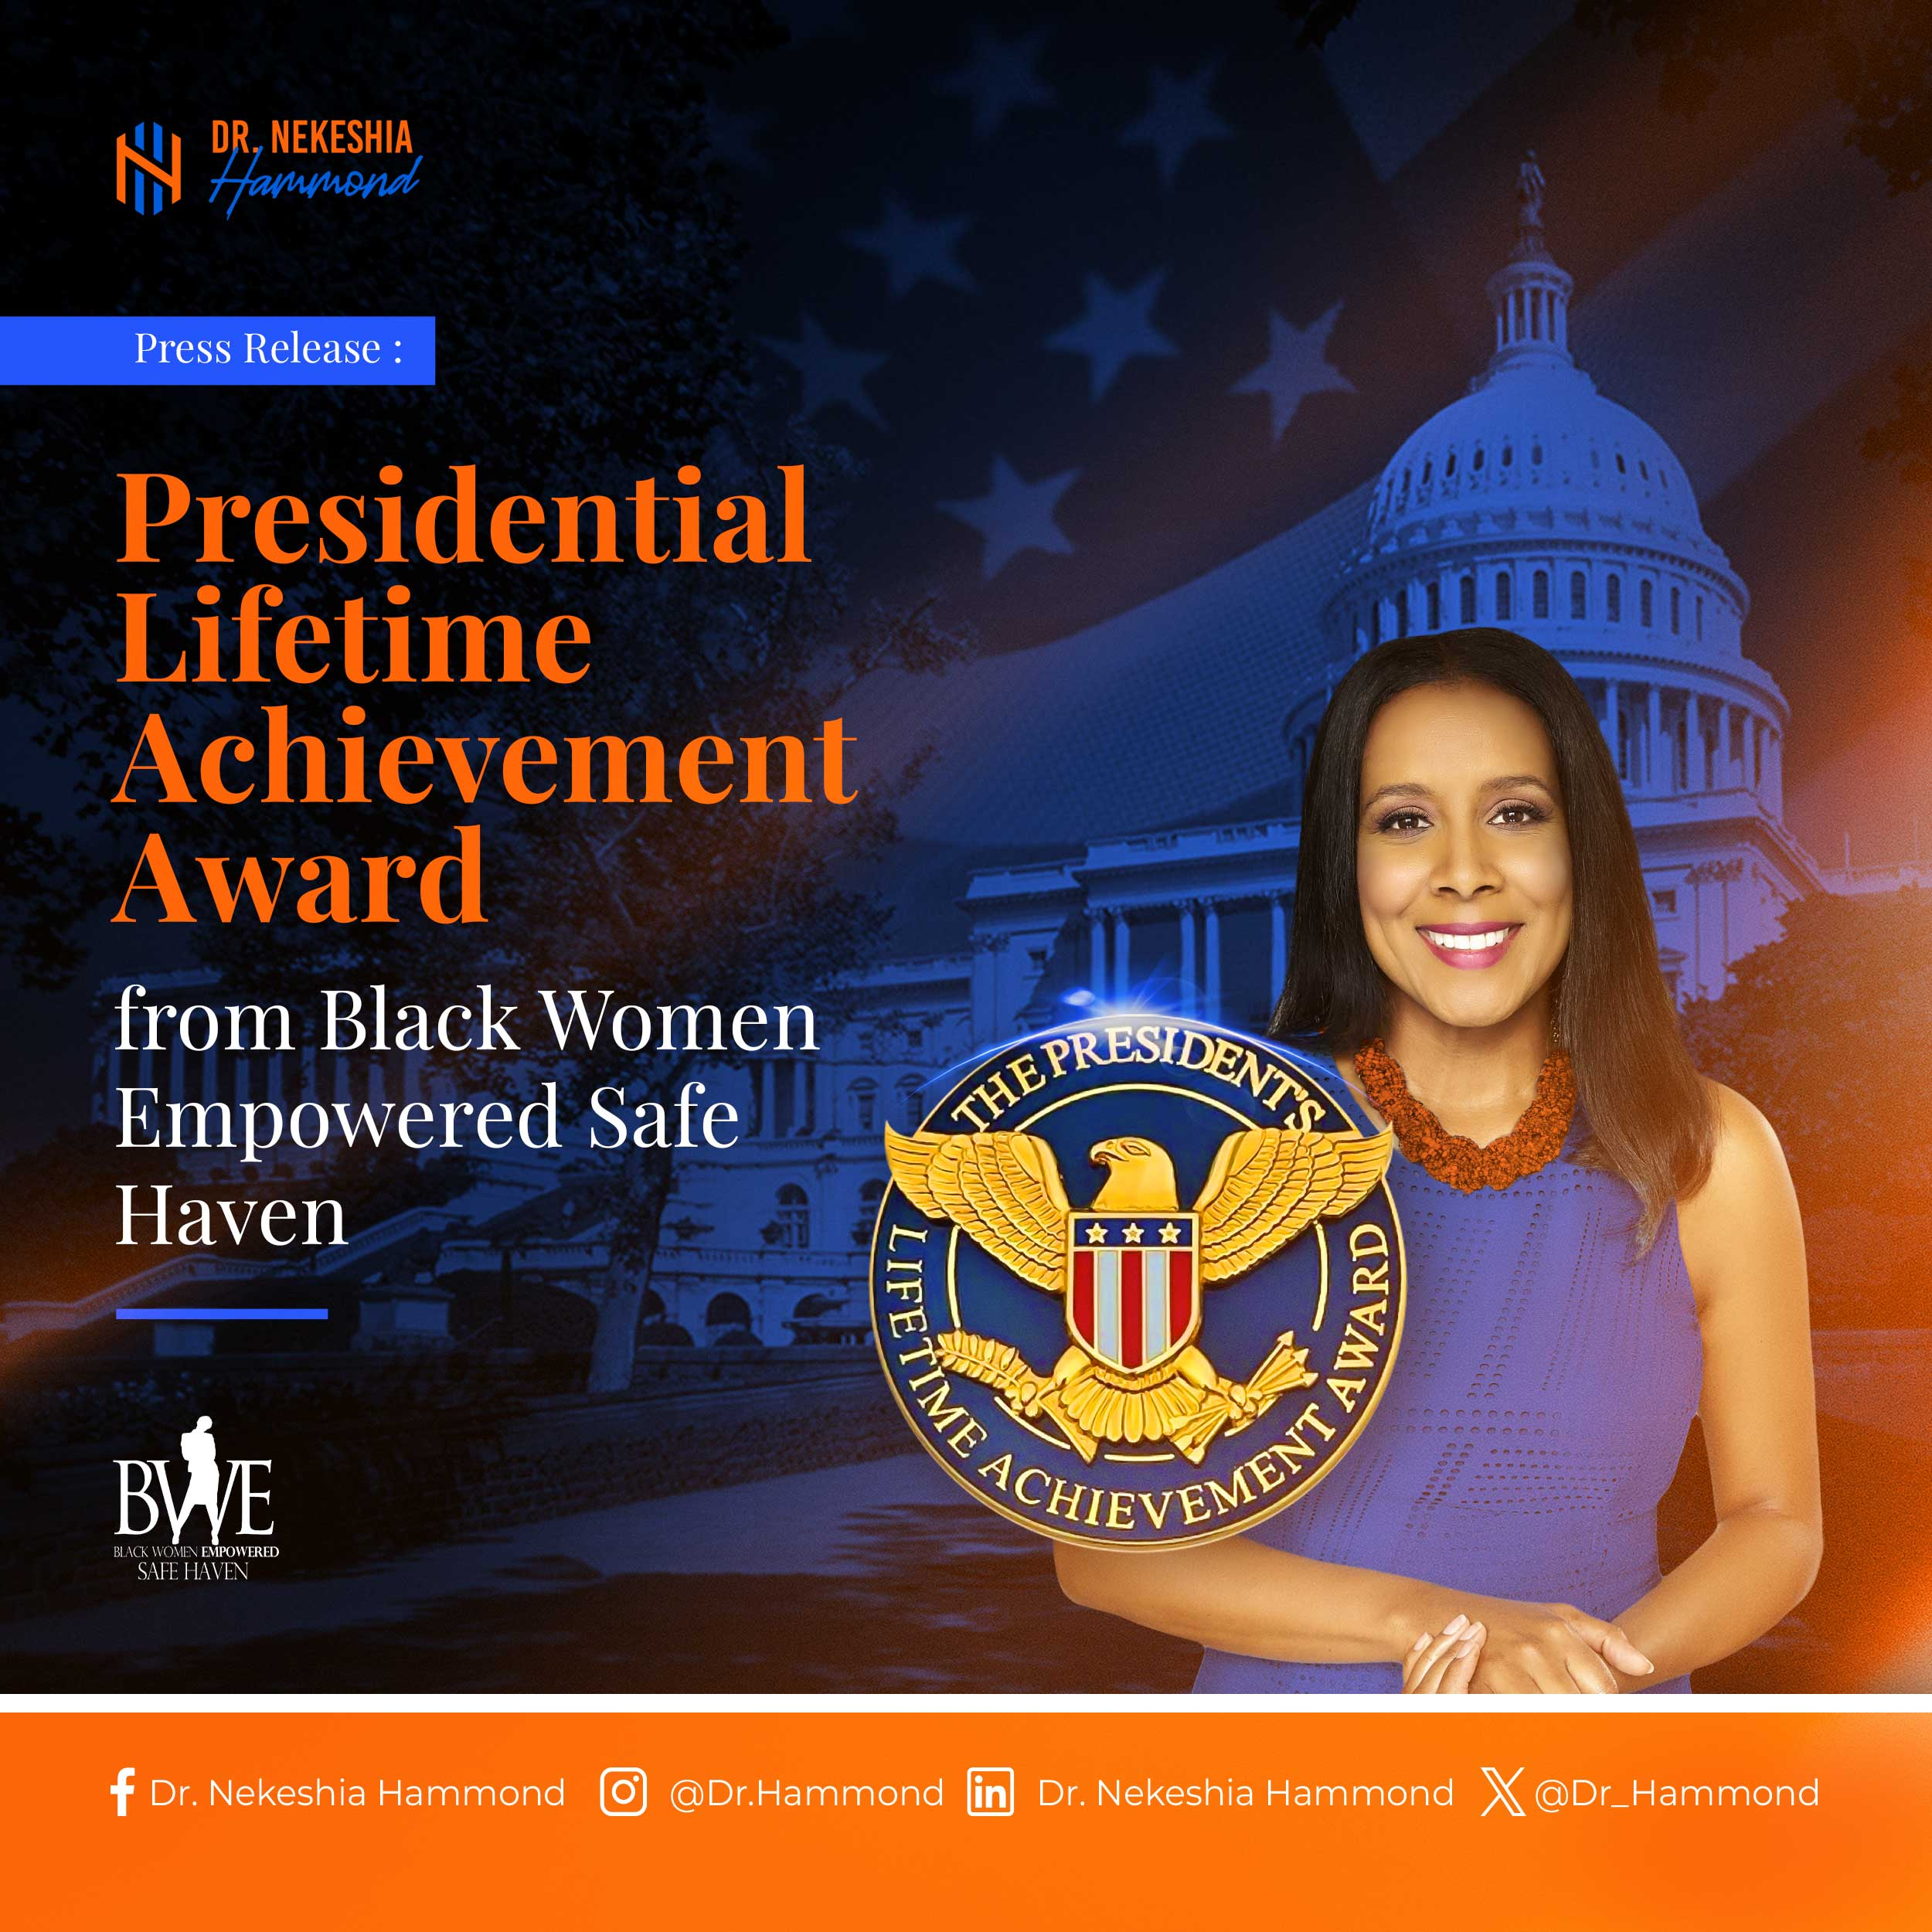 Presidential Lifetime Achievement Award from Black Women Empowered Safe Haven